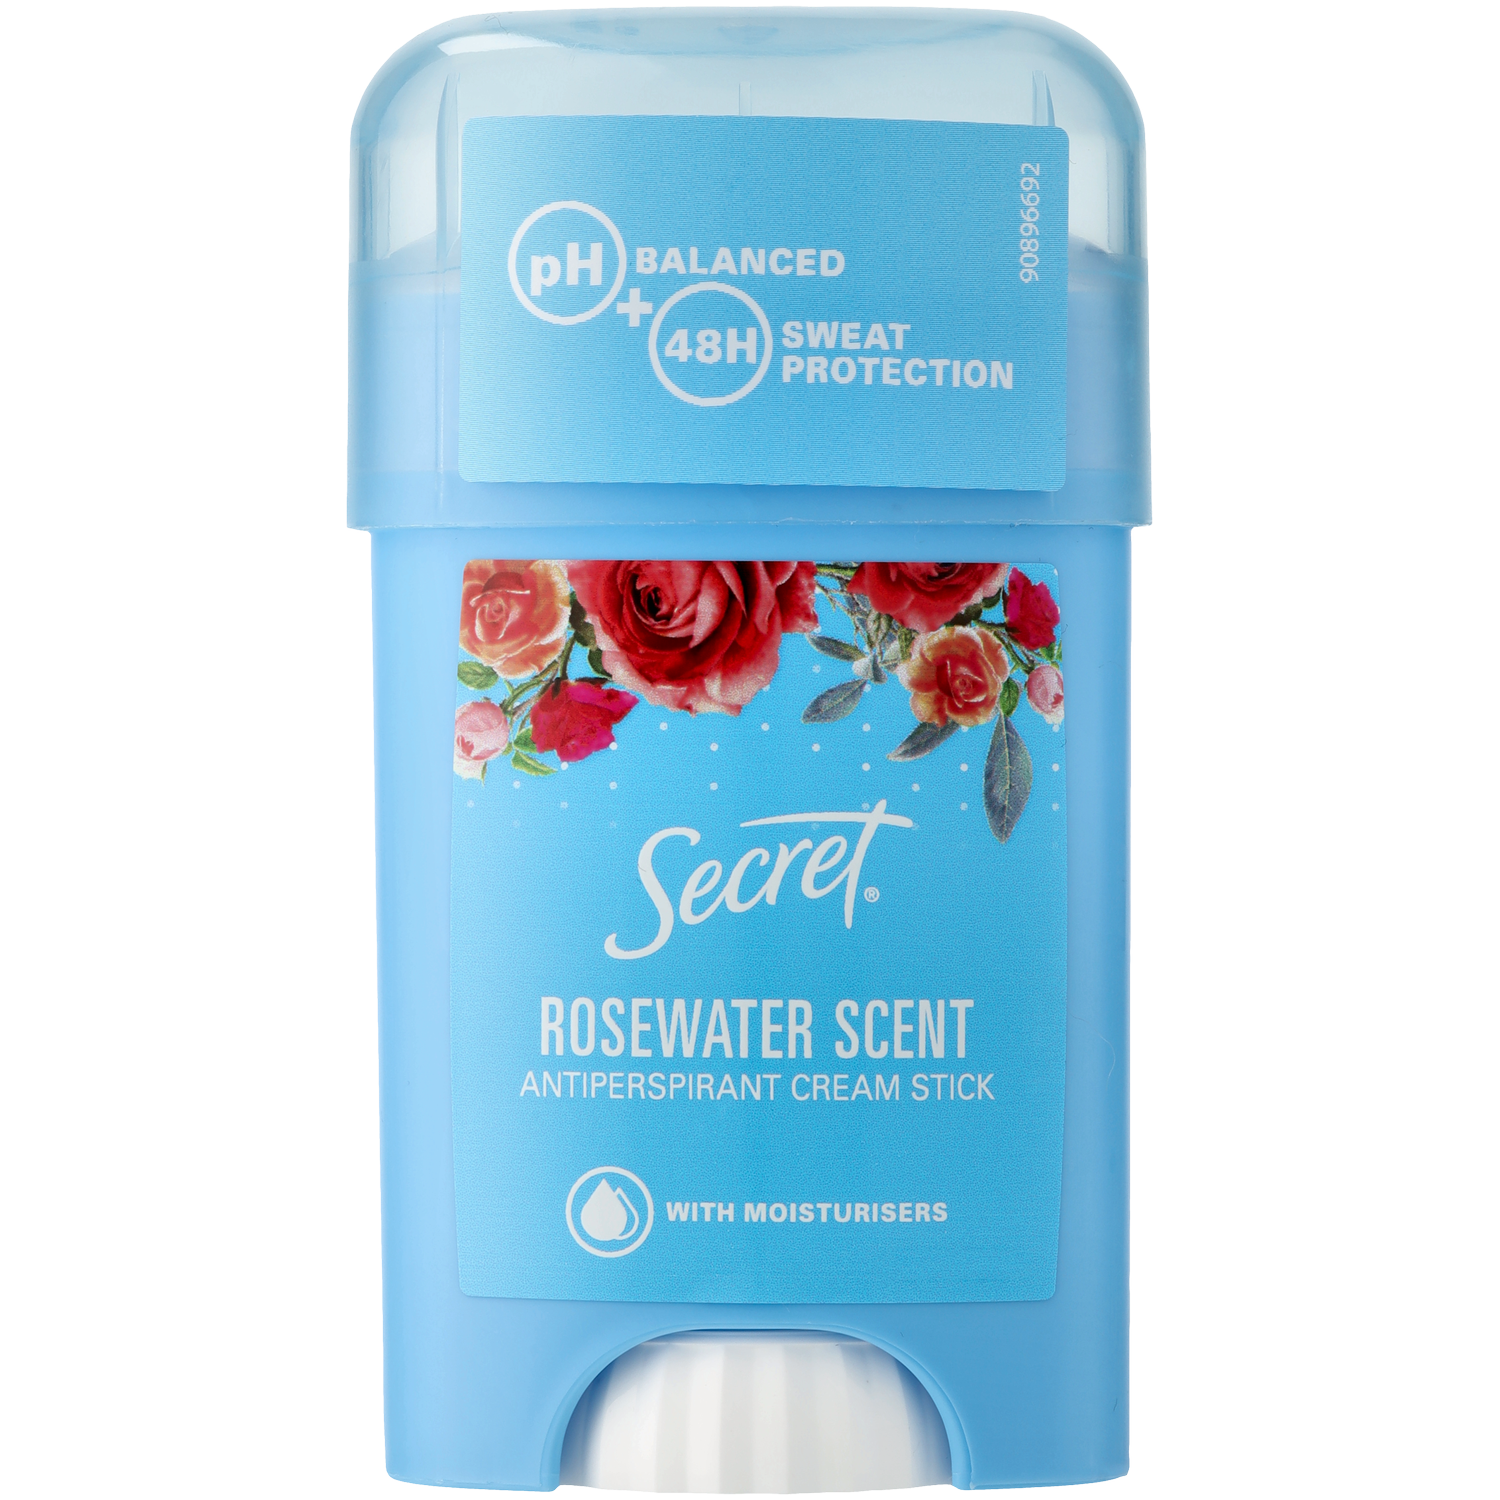 Secret Rosewater Scent крем-антиперспирант для женщин, 40 мл secret rosewater scent розовая вода дезодорант антиперспирант кремовый 40 гр 2 штуки